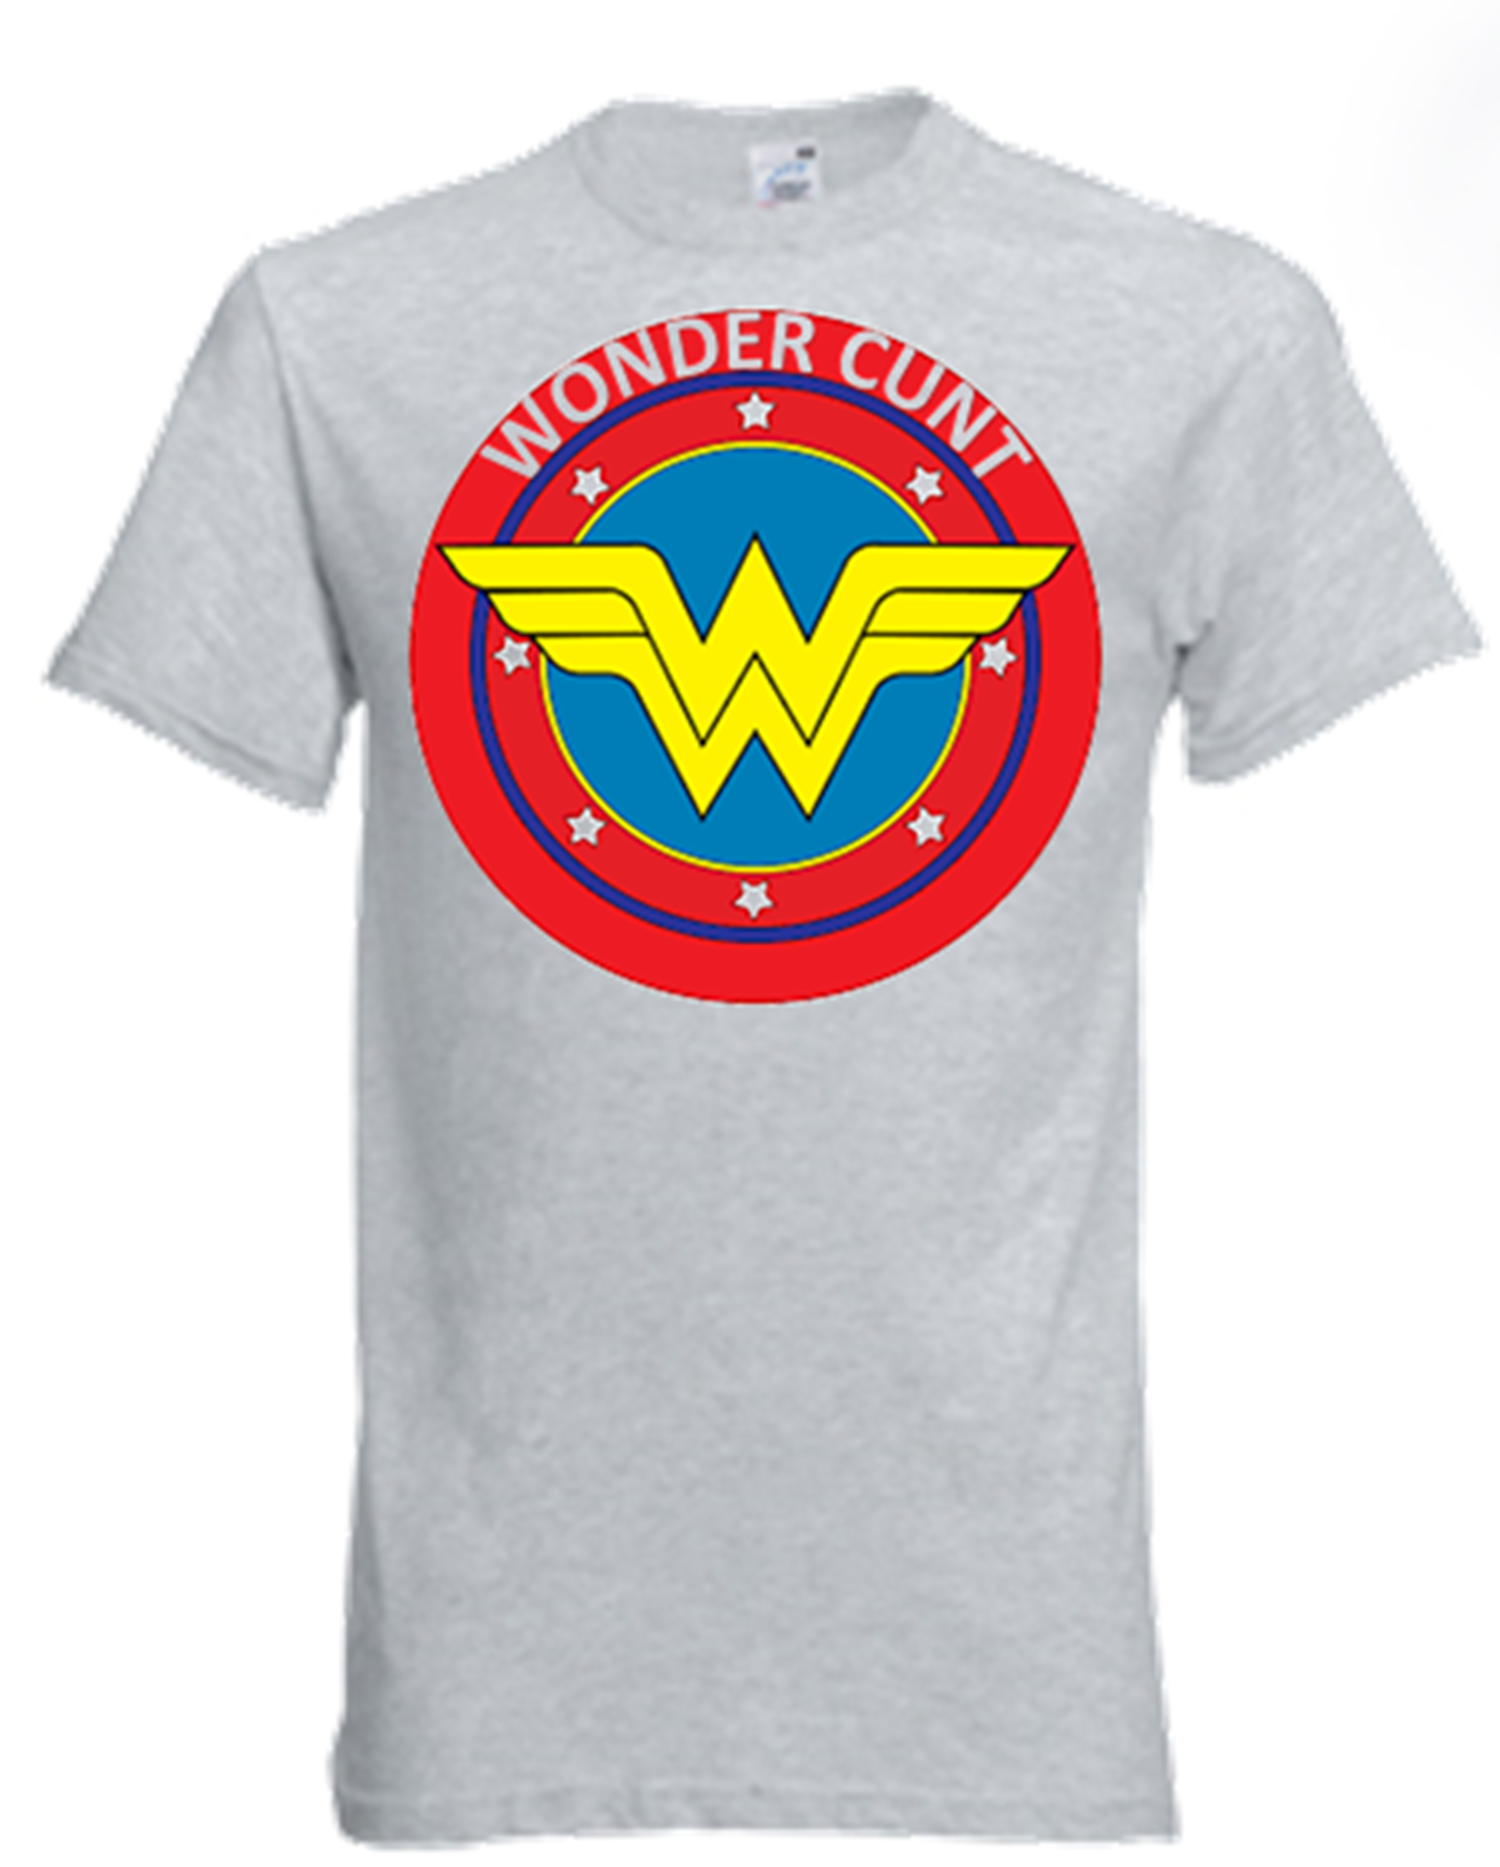 Wonder Woman / Wonder C*** T-Shirt - Army 1157 kit S / Grey Army 1157 Kit Veterans Owned Business